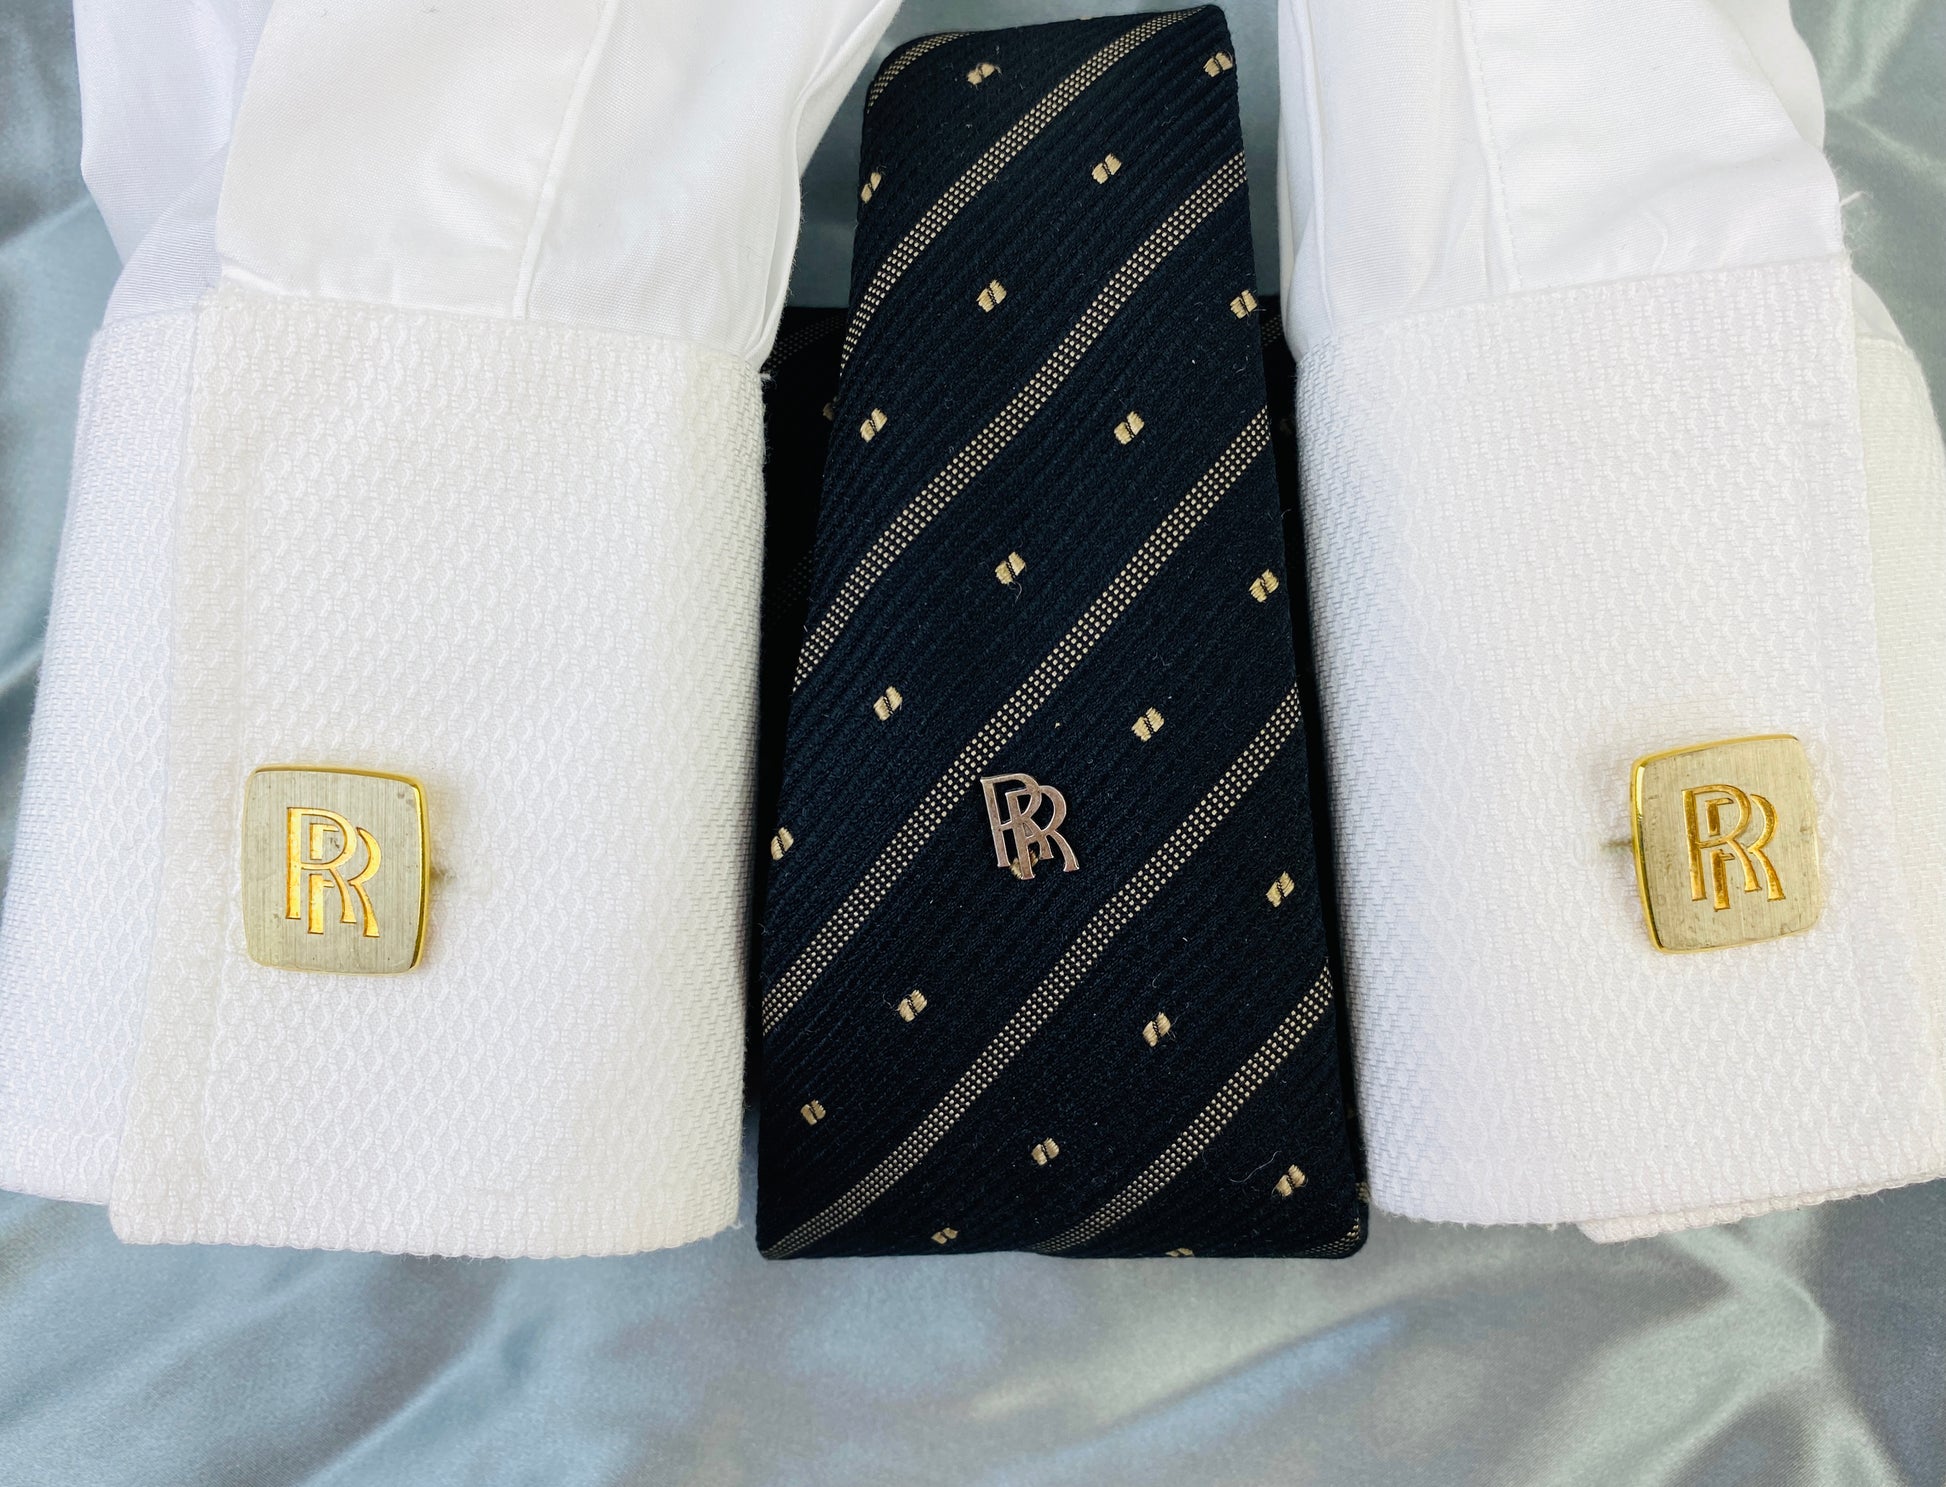 Vintage Rolls Royce 'RR' Gold & Silver Cufflinks & Tie Tack